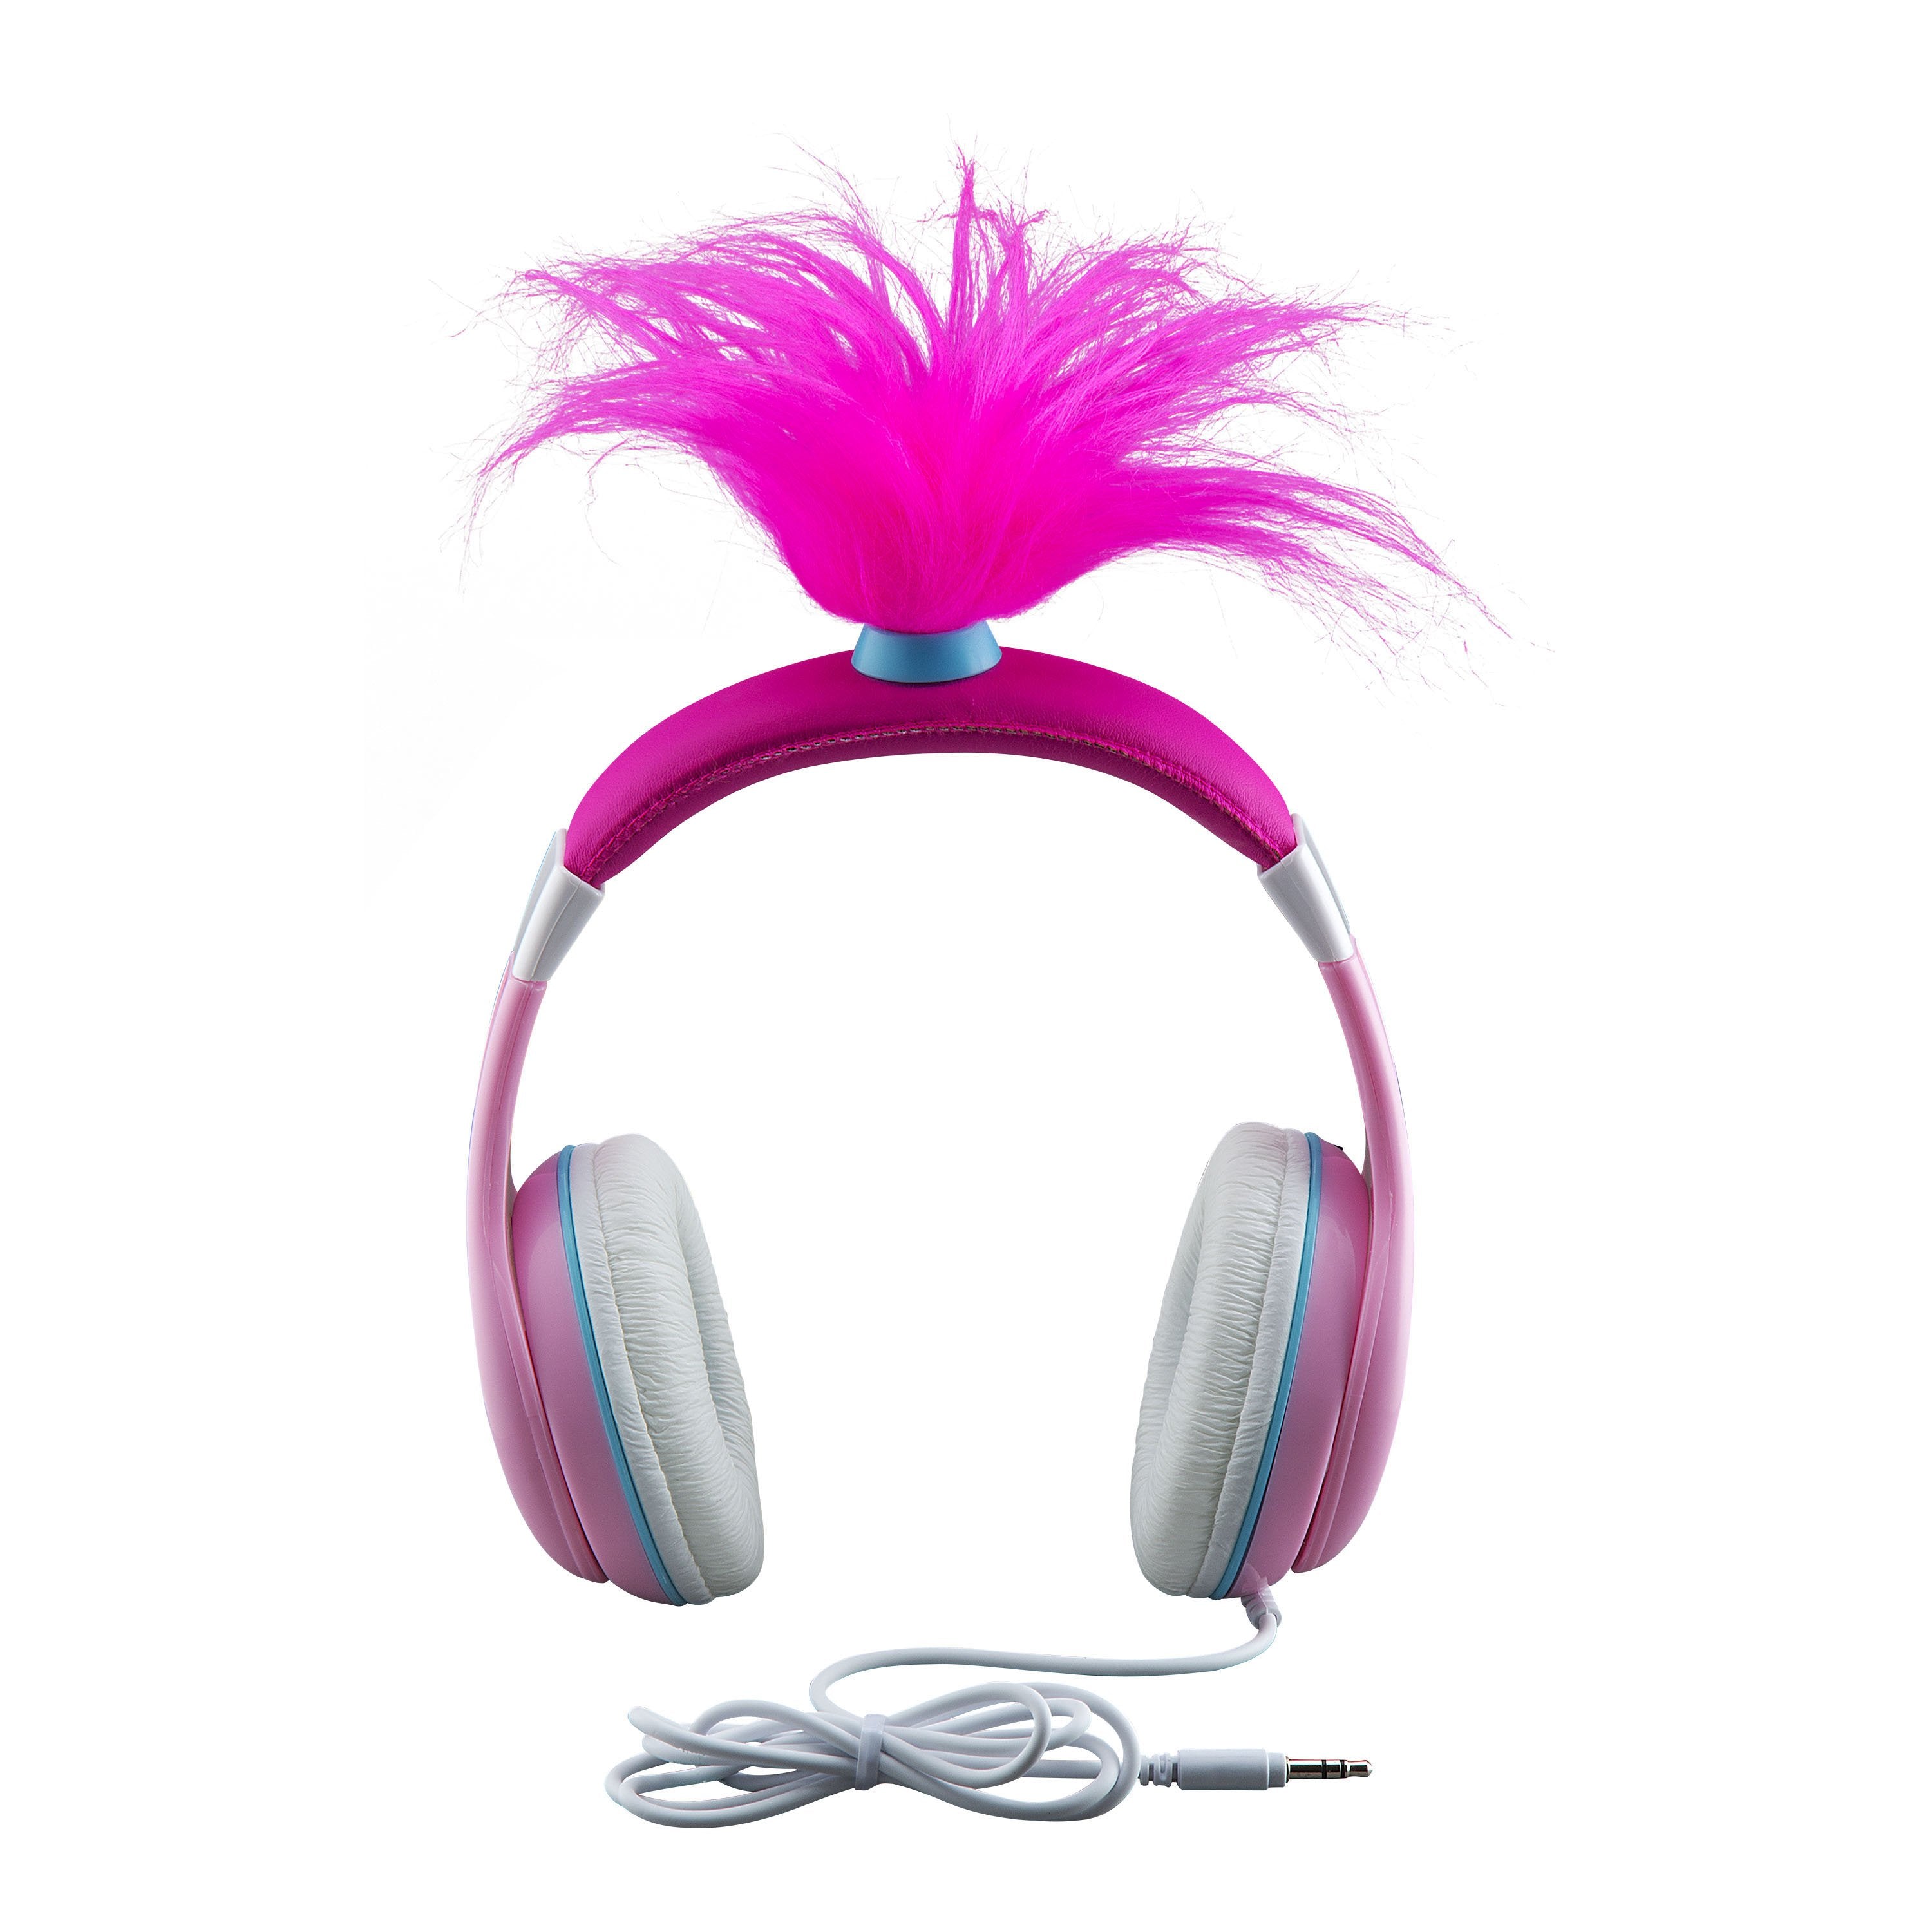 KIDdesigns Trolls World Tour Poppy Wired Headphones - Volume Limiting for Kid Friendly Safe Listening |Glow in the Dark w/ 3 Volume Settings | Adjustbale Headband, Good Sound 3.5mm connectivity - Pink